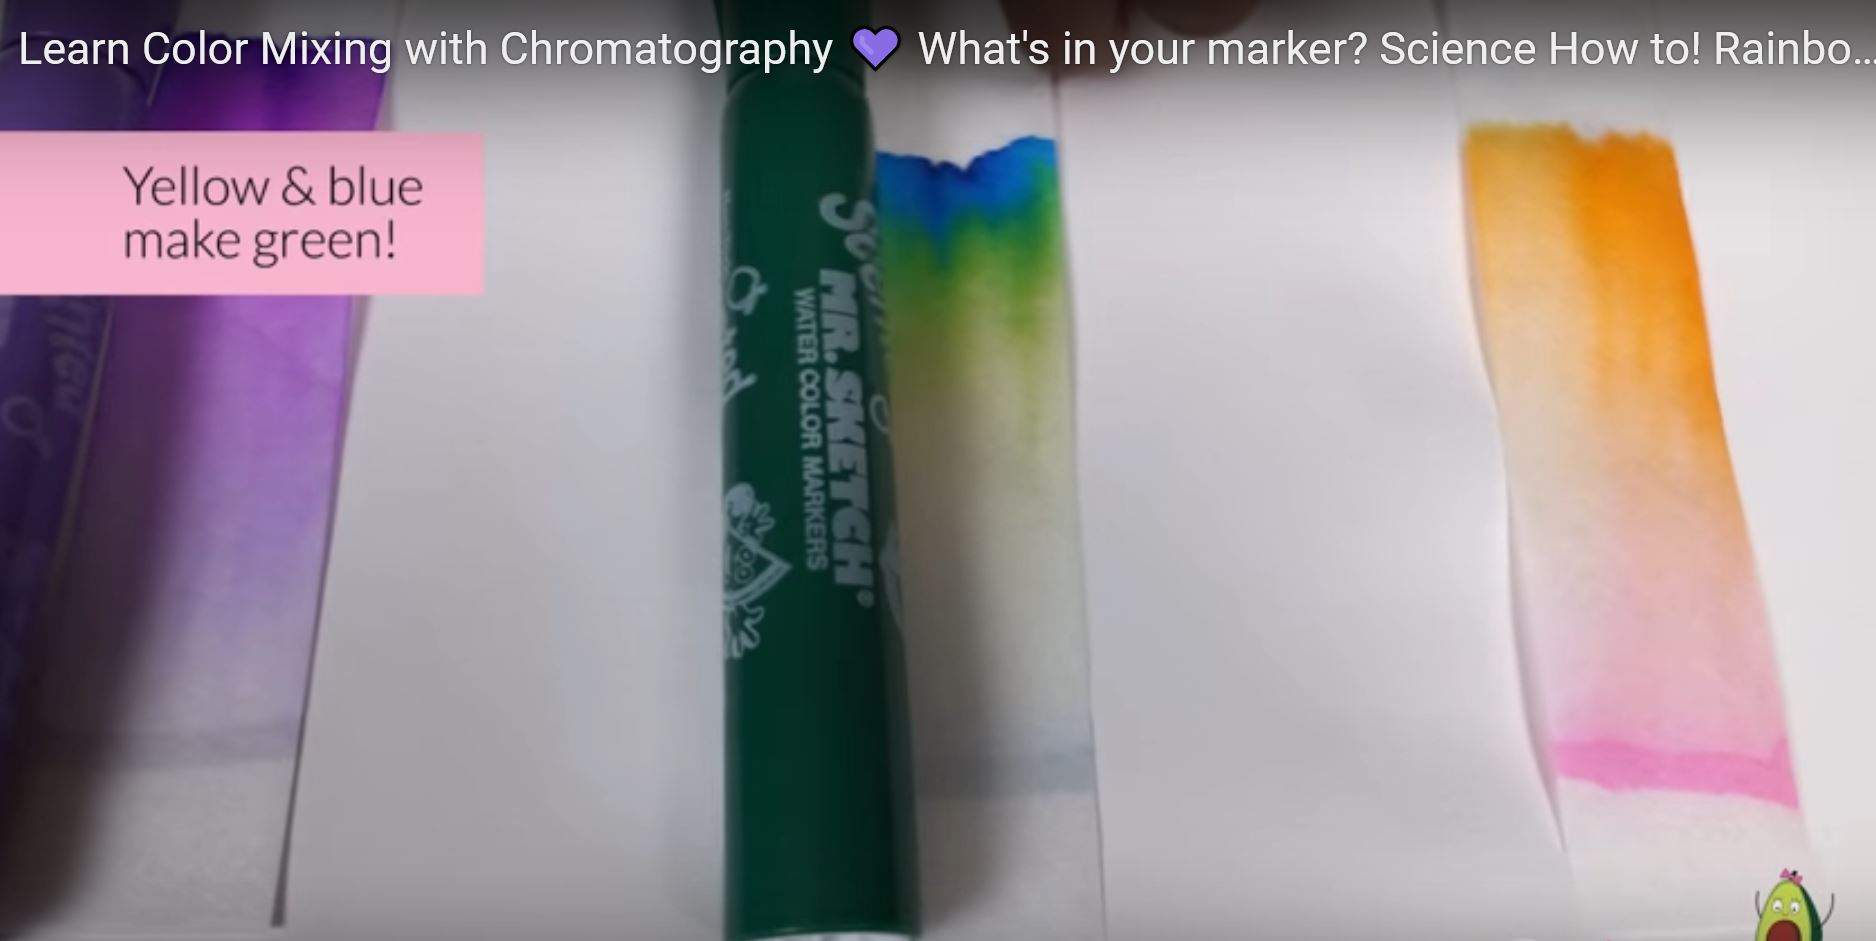 Chromatography strips